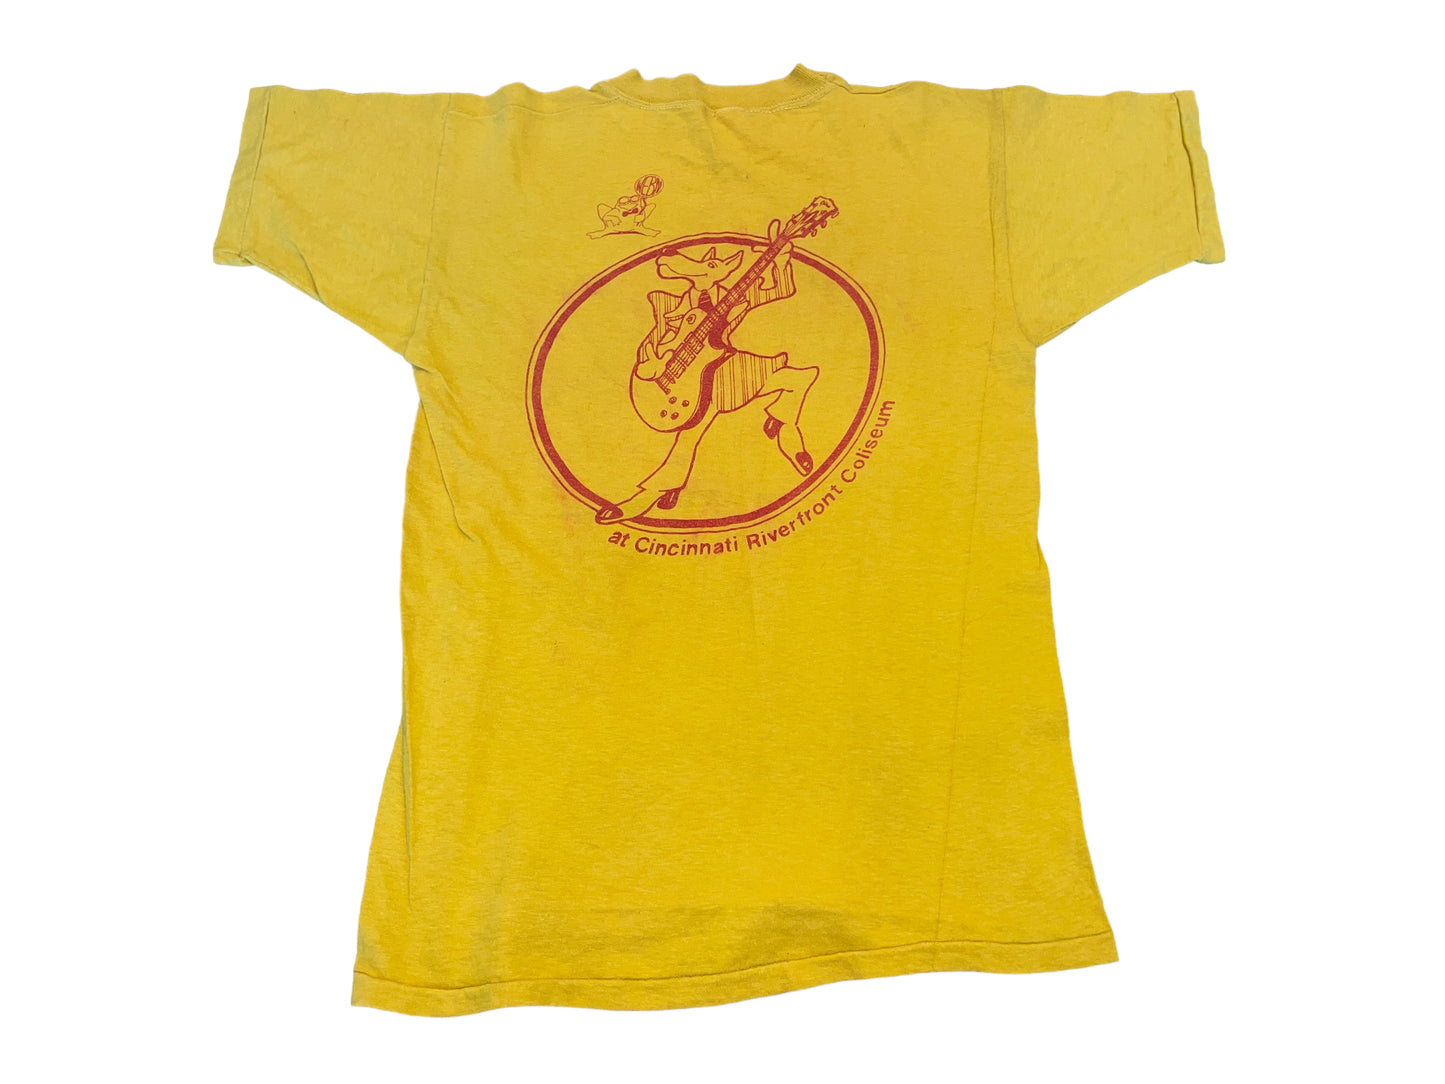 Vintage 70's Jethro Tull T-Shirt